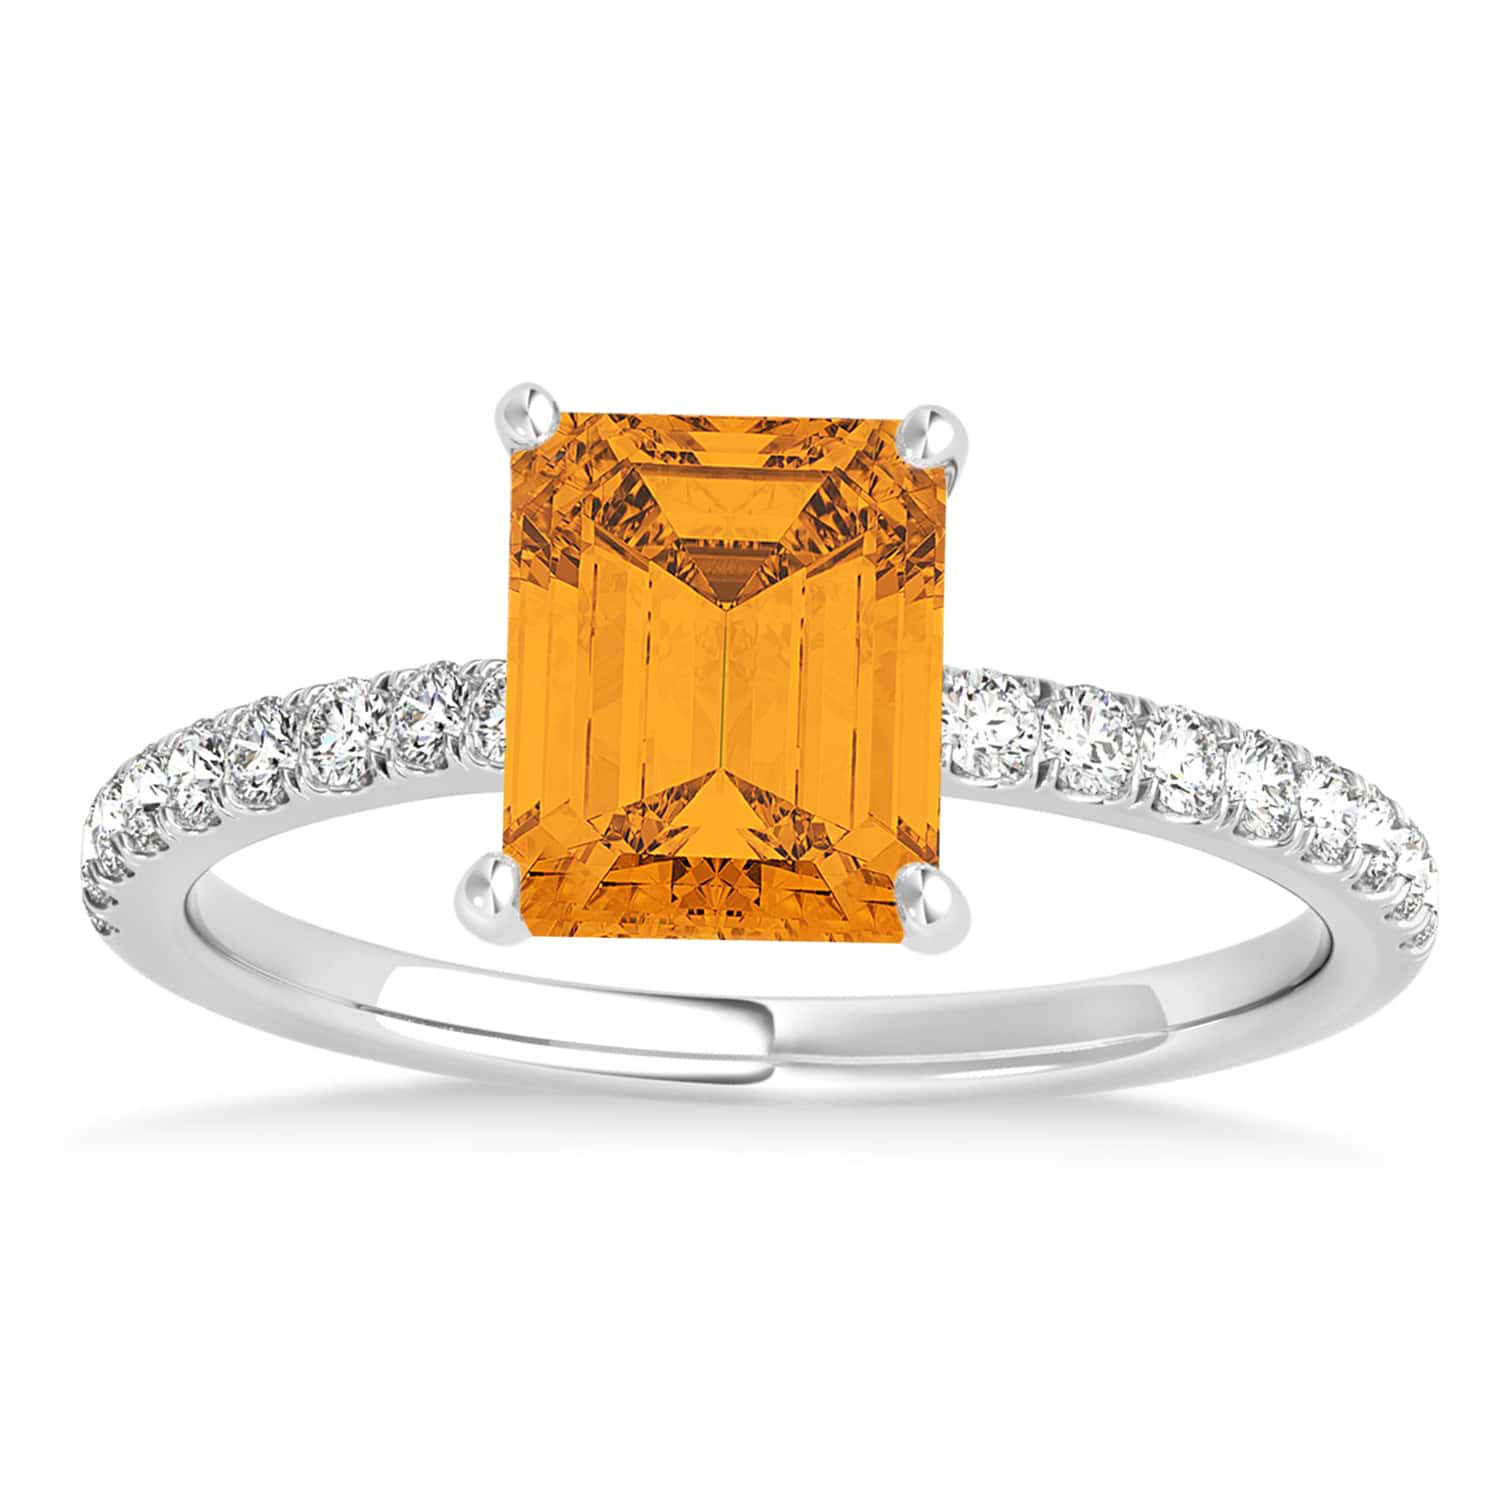 Emerald Citrine & Diamond Single Row Hidden Halo Engagement Ring 14k White Gold (1.31ct)